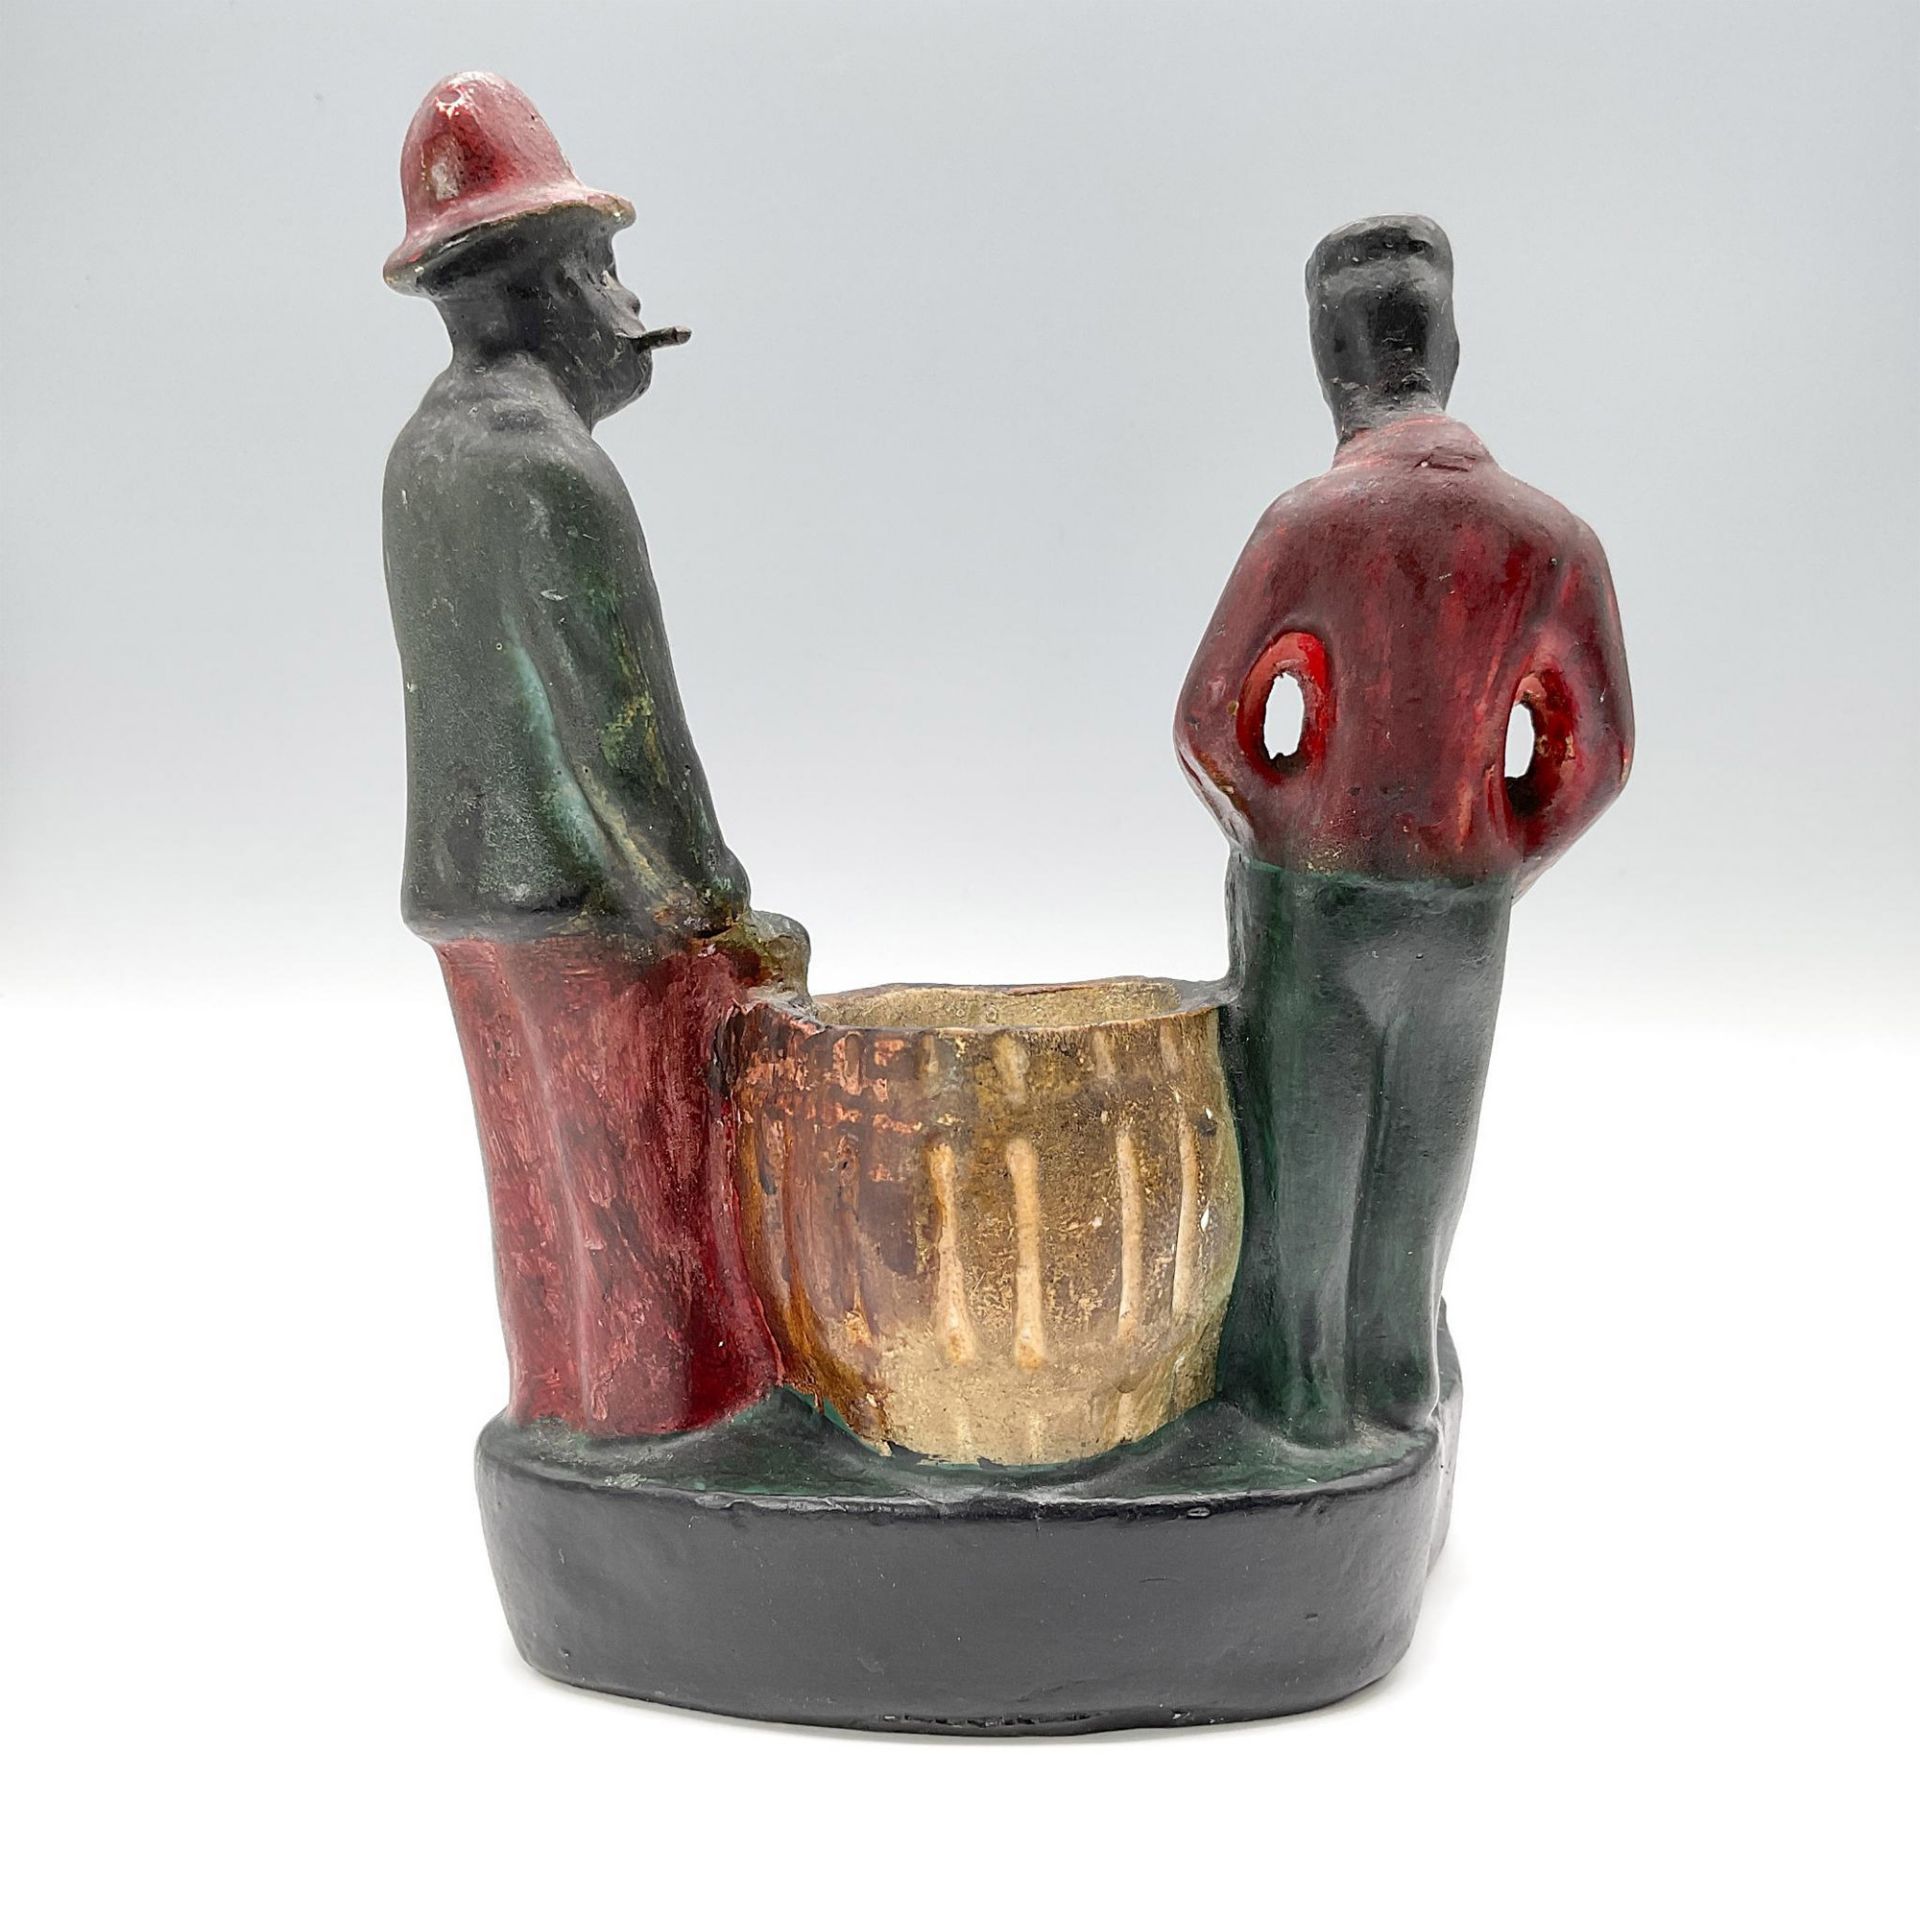 Black Americana Ceramic Ashtray with Match Holder - Image 2 of 3